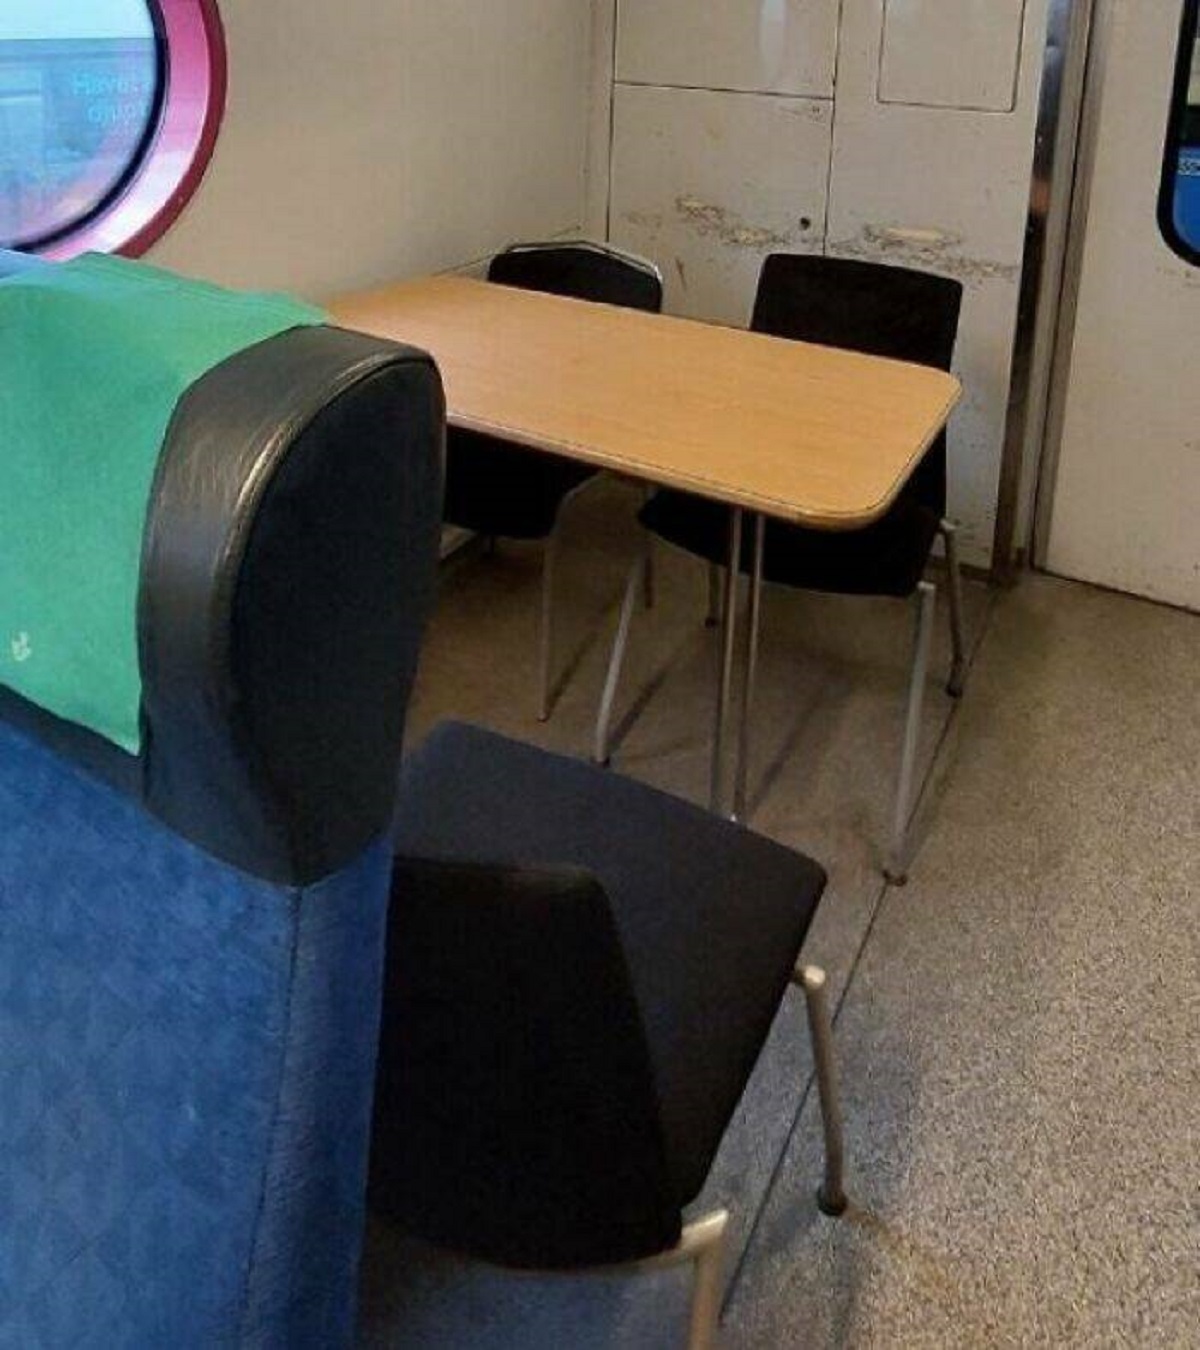 "Seats In A Swedish Train"